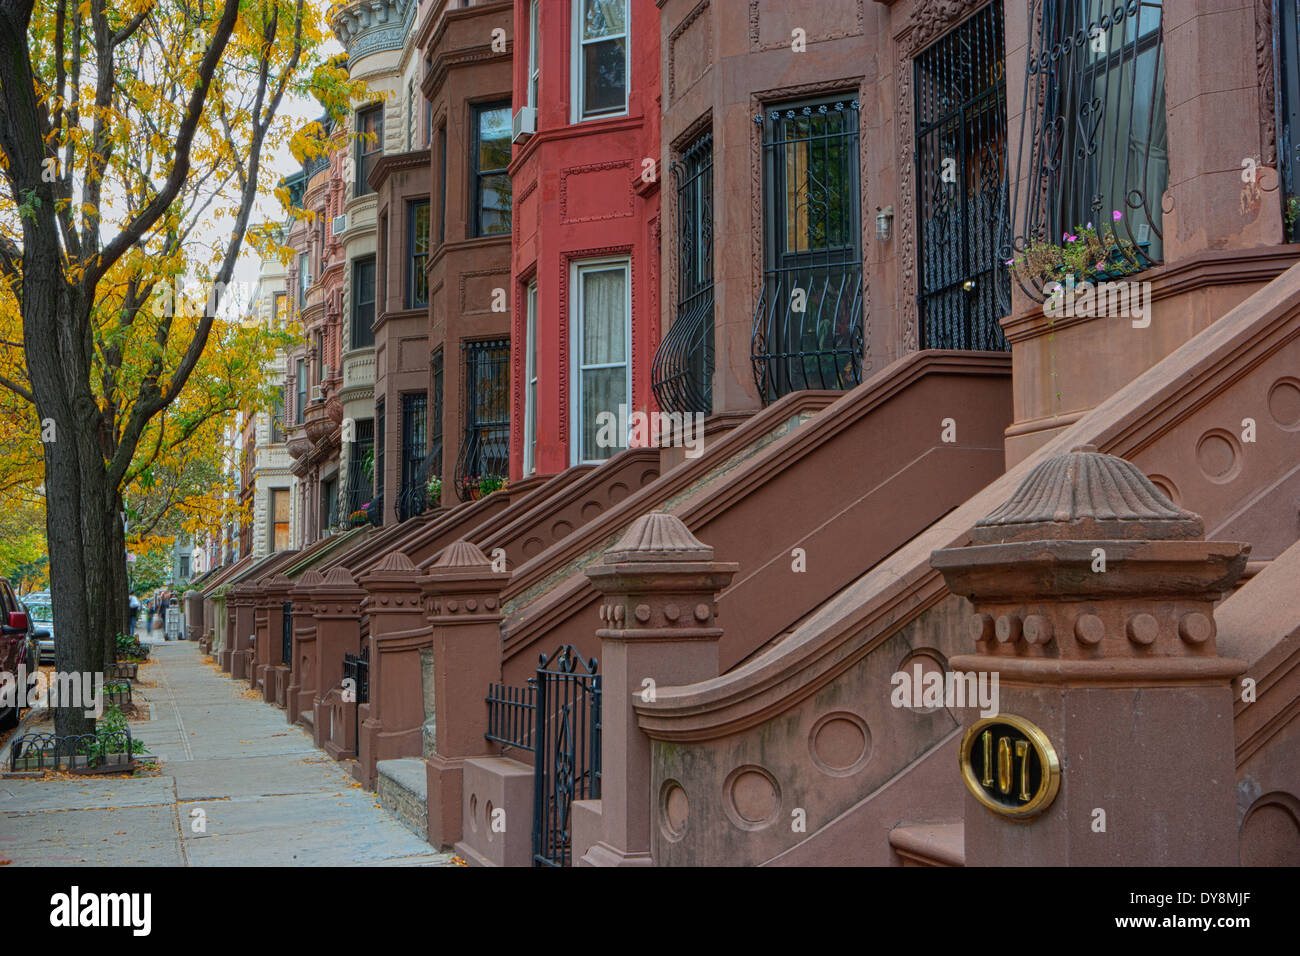 Harlem Row Houses in Autumn, New York City, New York, USA Stock Photo